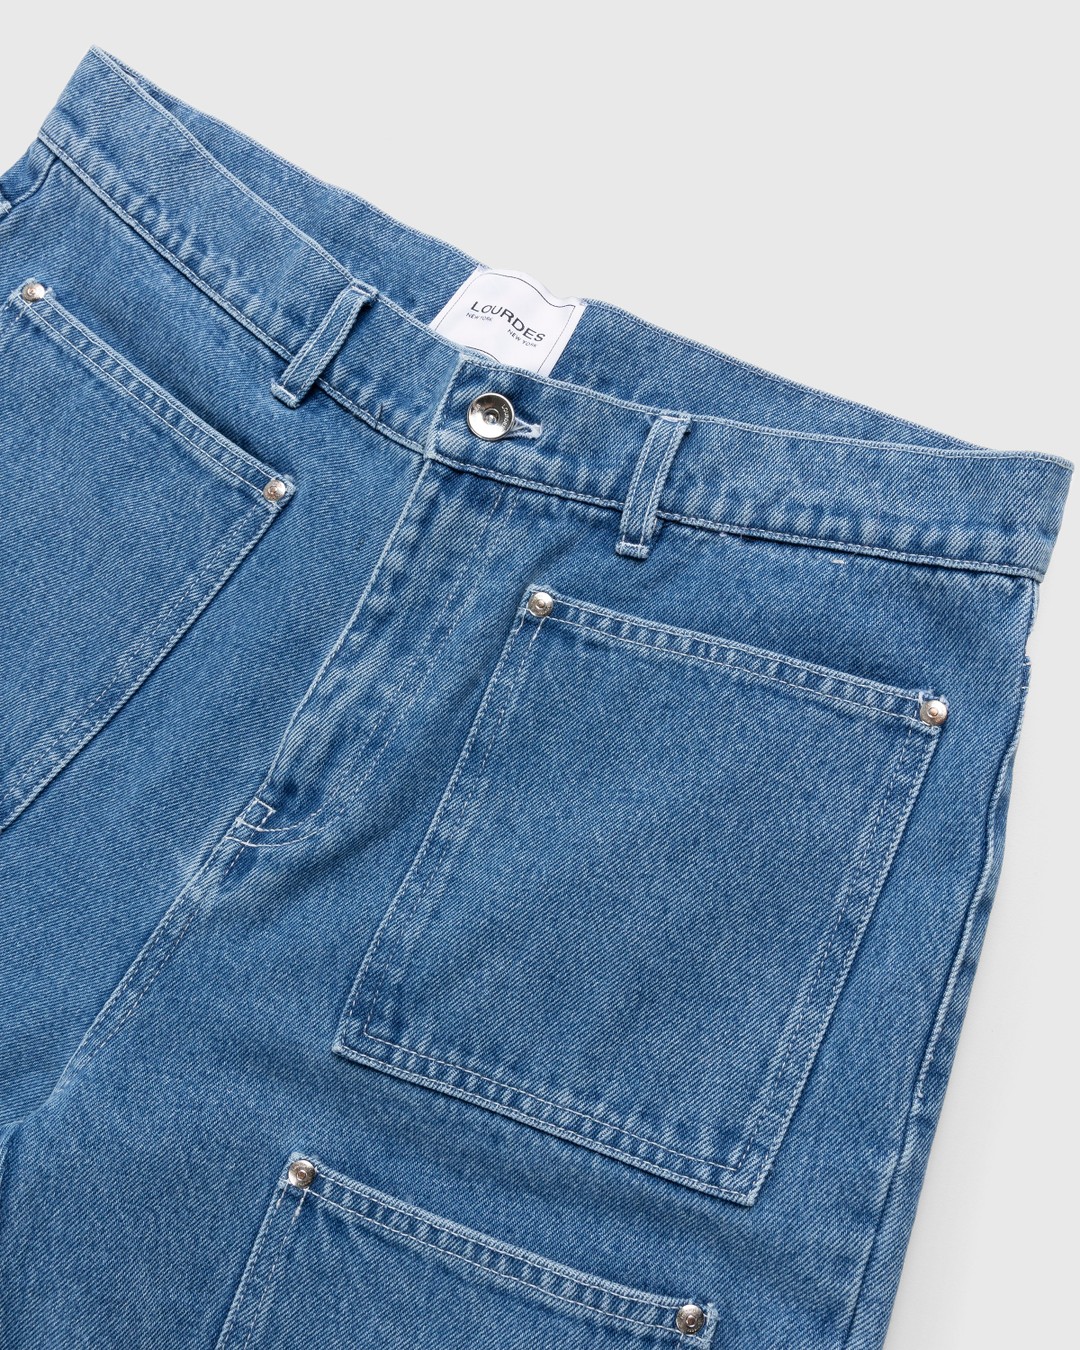 Lourdes New York – Multi-Pocket Denim Blue - Pants - Blue - Image 4